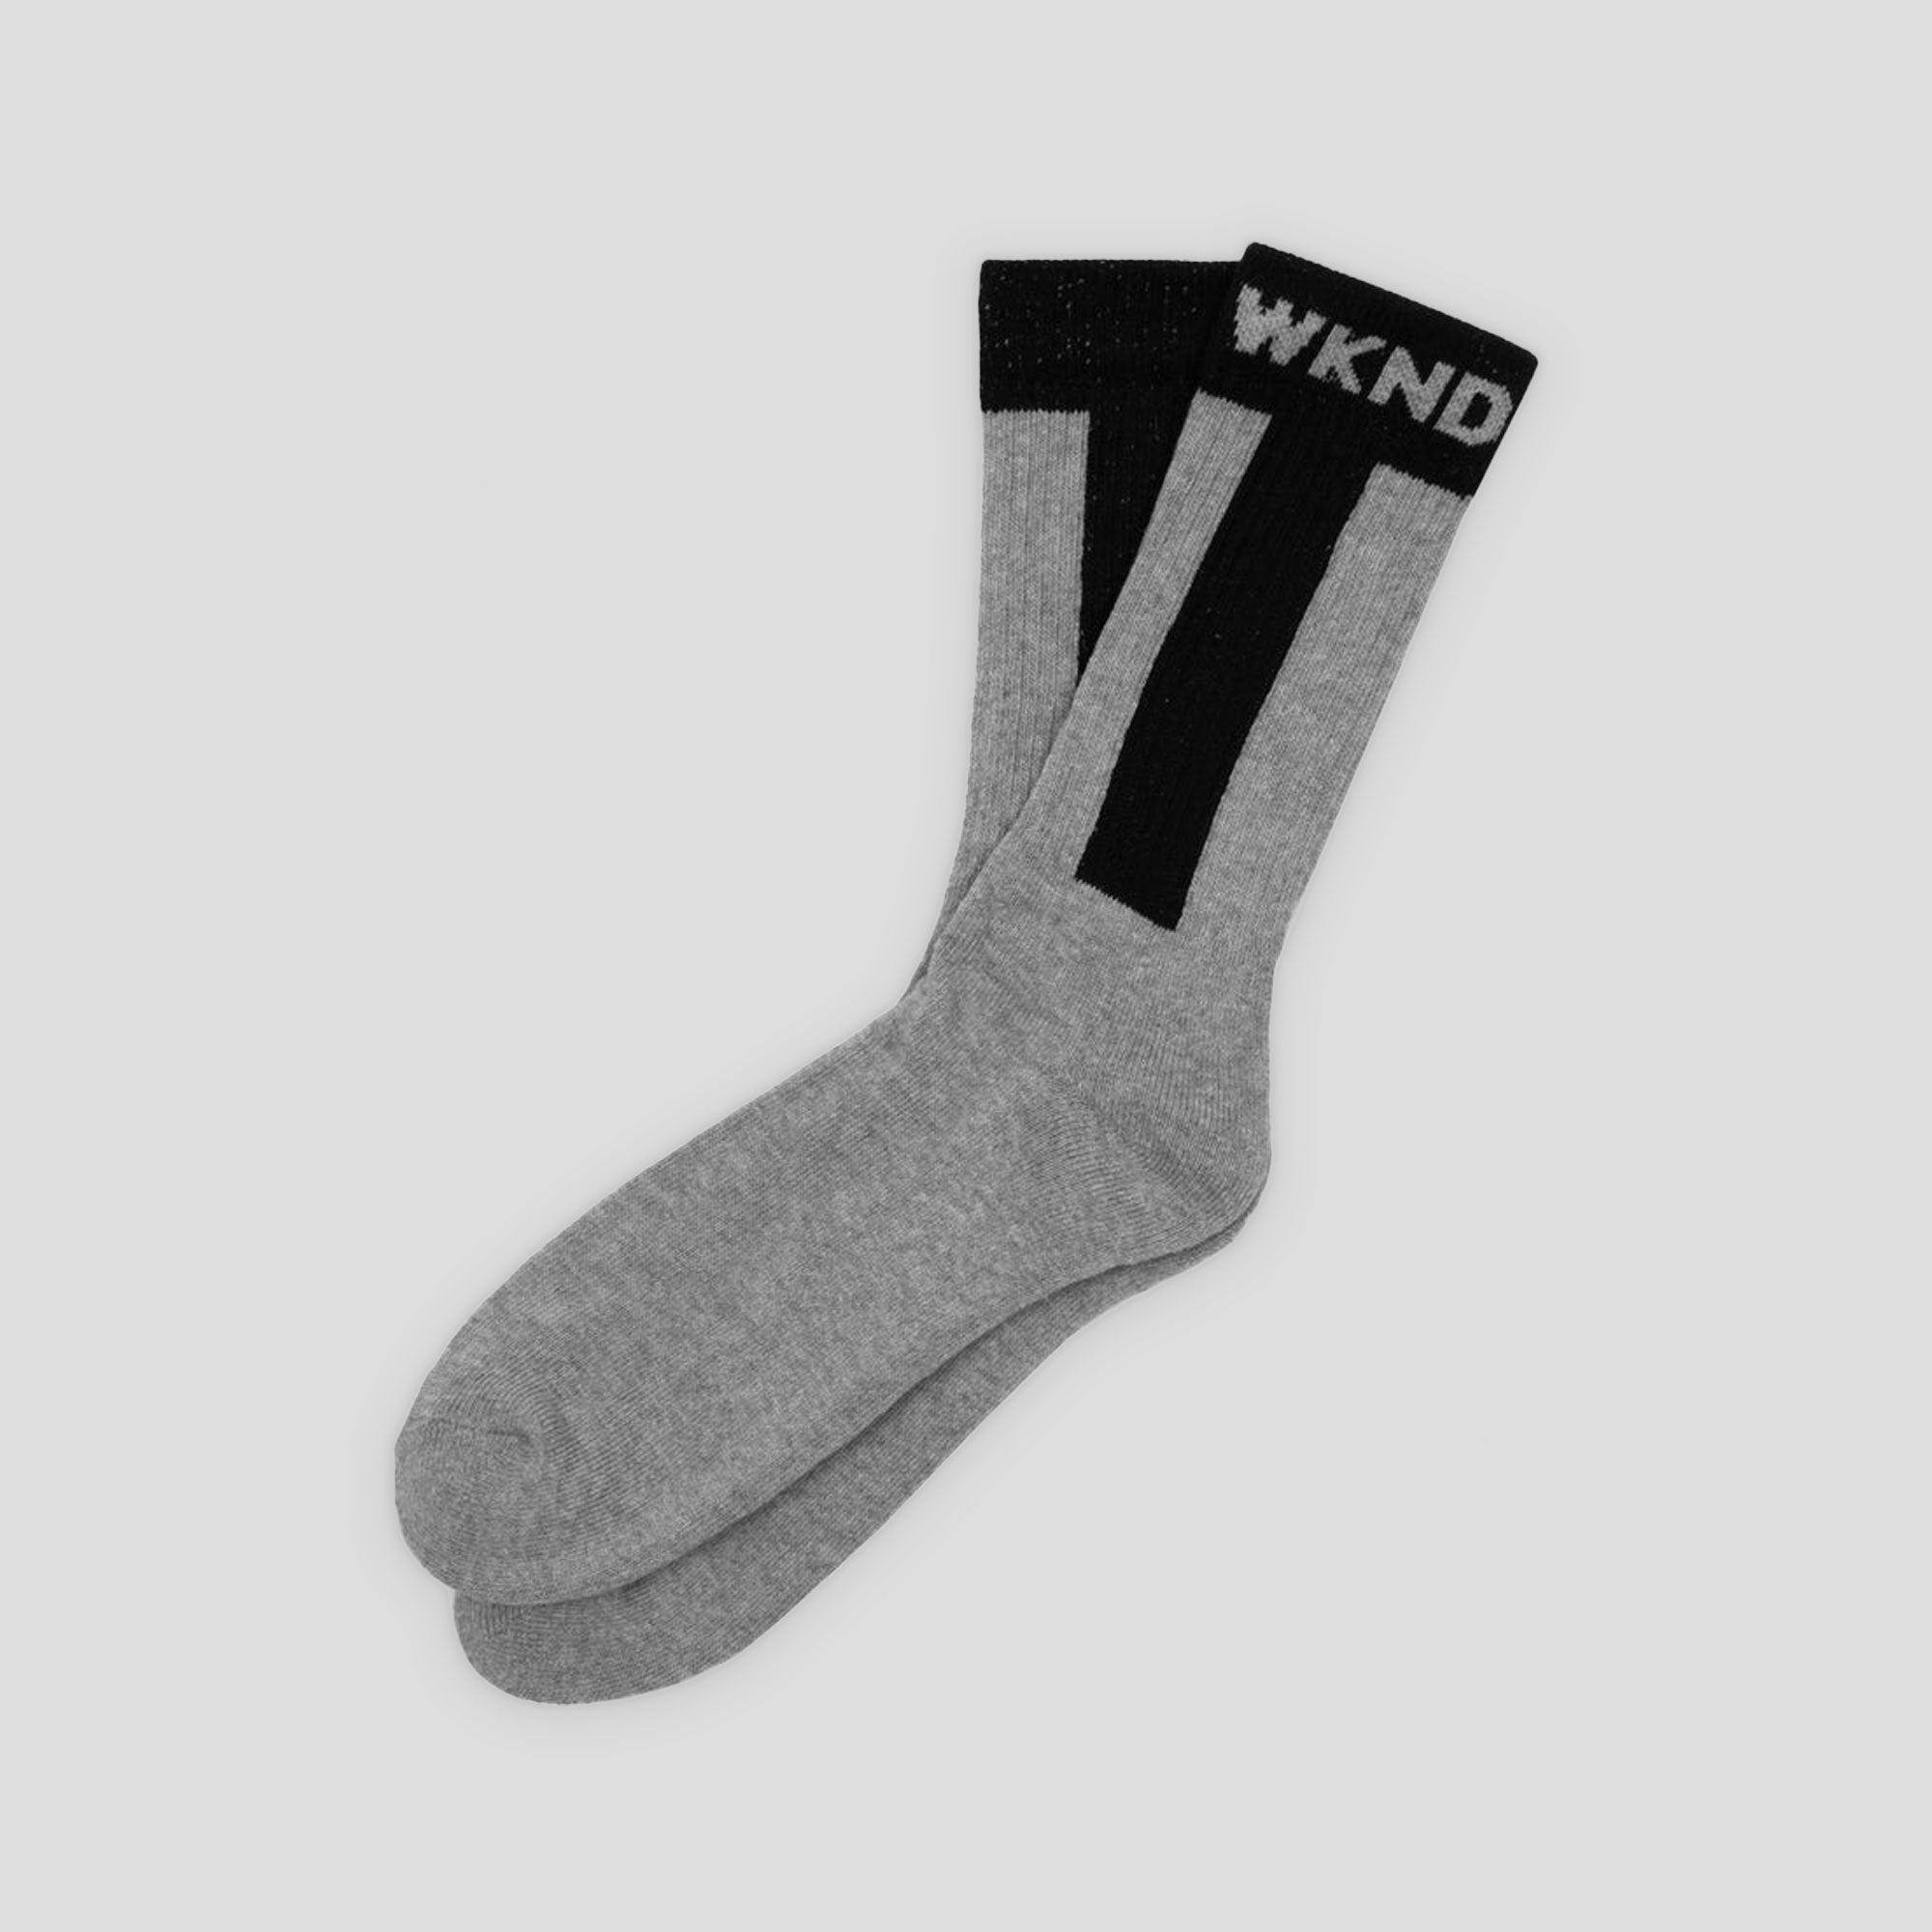 WKND Baseball Socks - Ash / Black